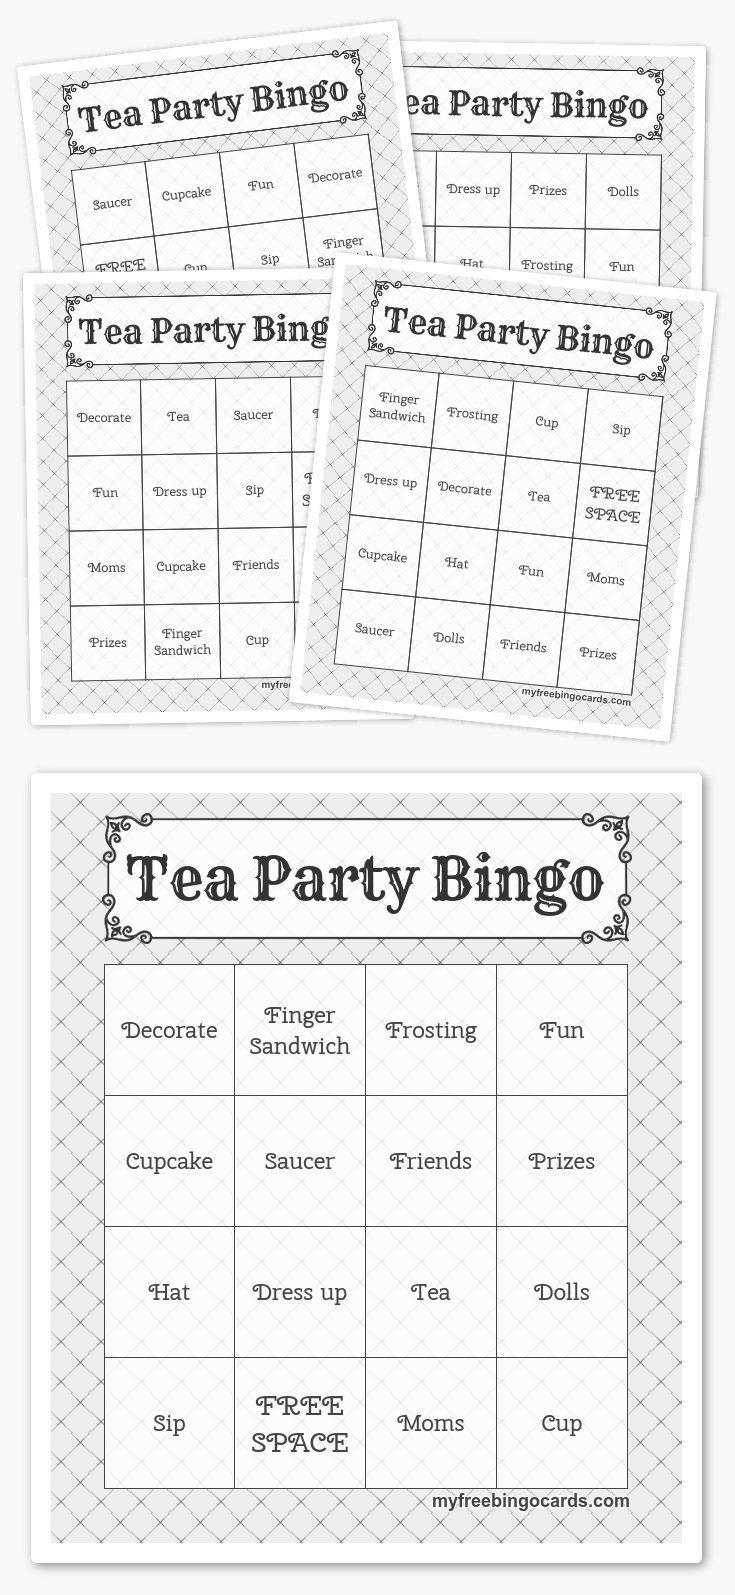 Free Printable Bingo Cards In 2019 | Printables | Pinterest | Harry - Free Printable Tea Party Games